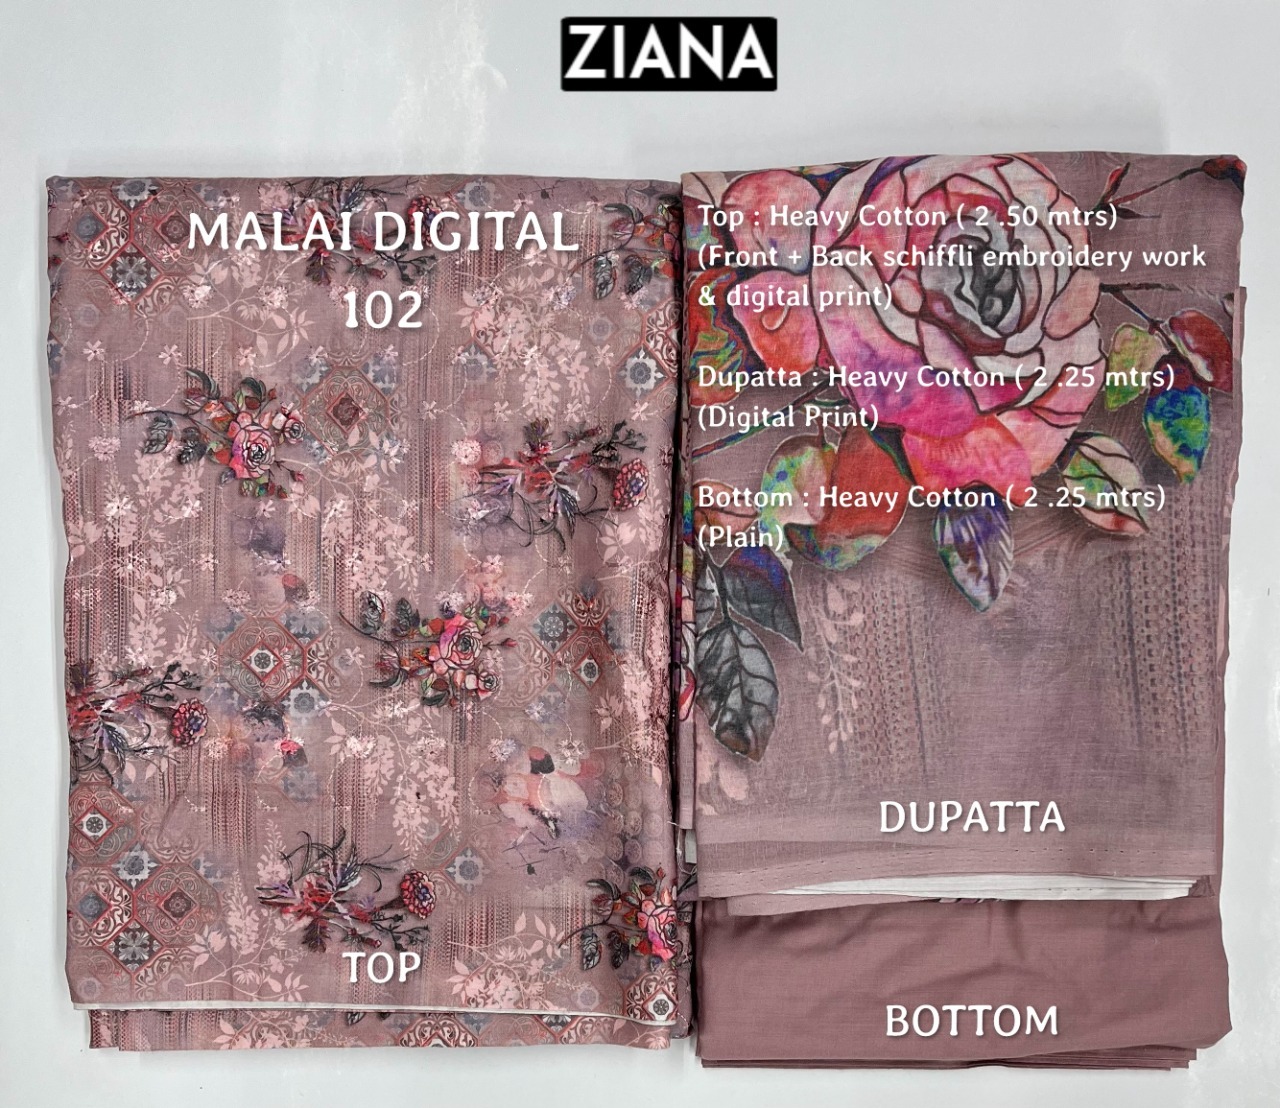 ziana malai digital 102 heavy cotton attrective look embroidery salwar suit colour set